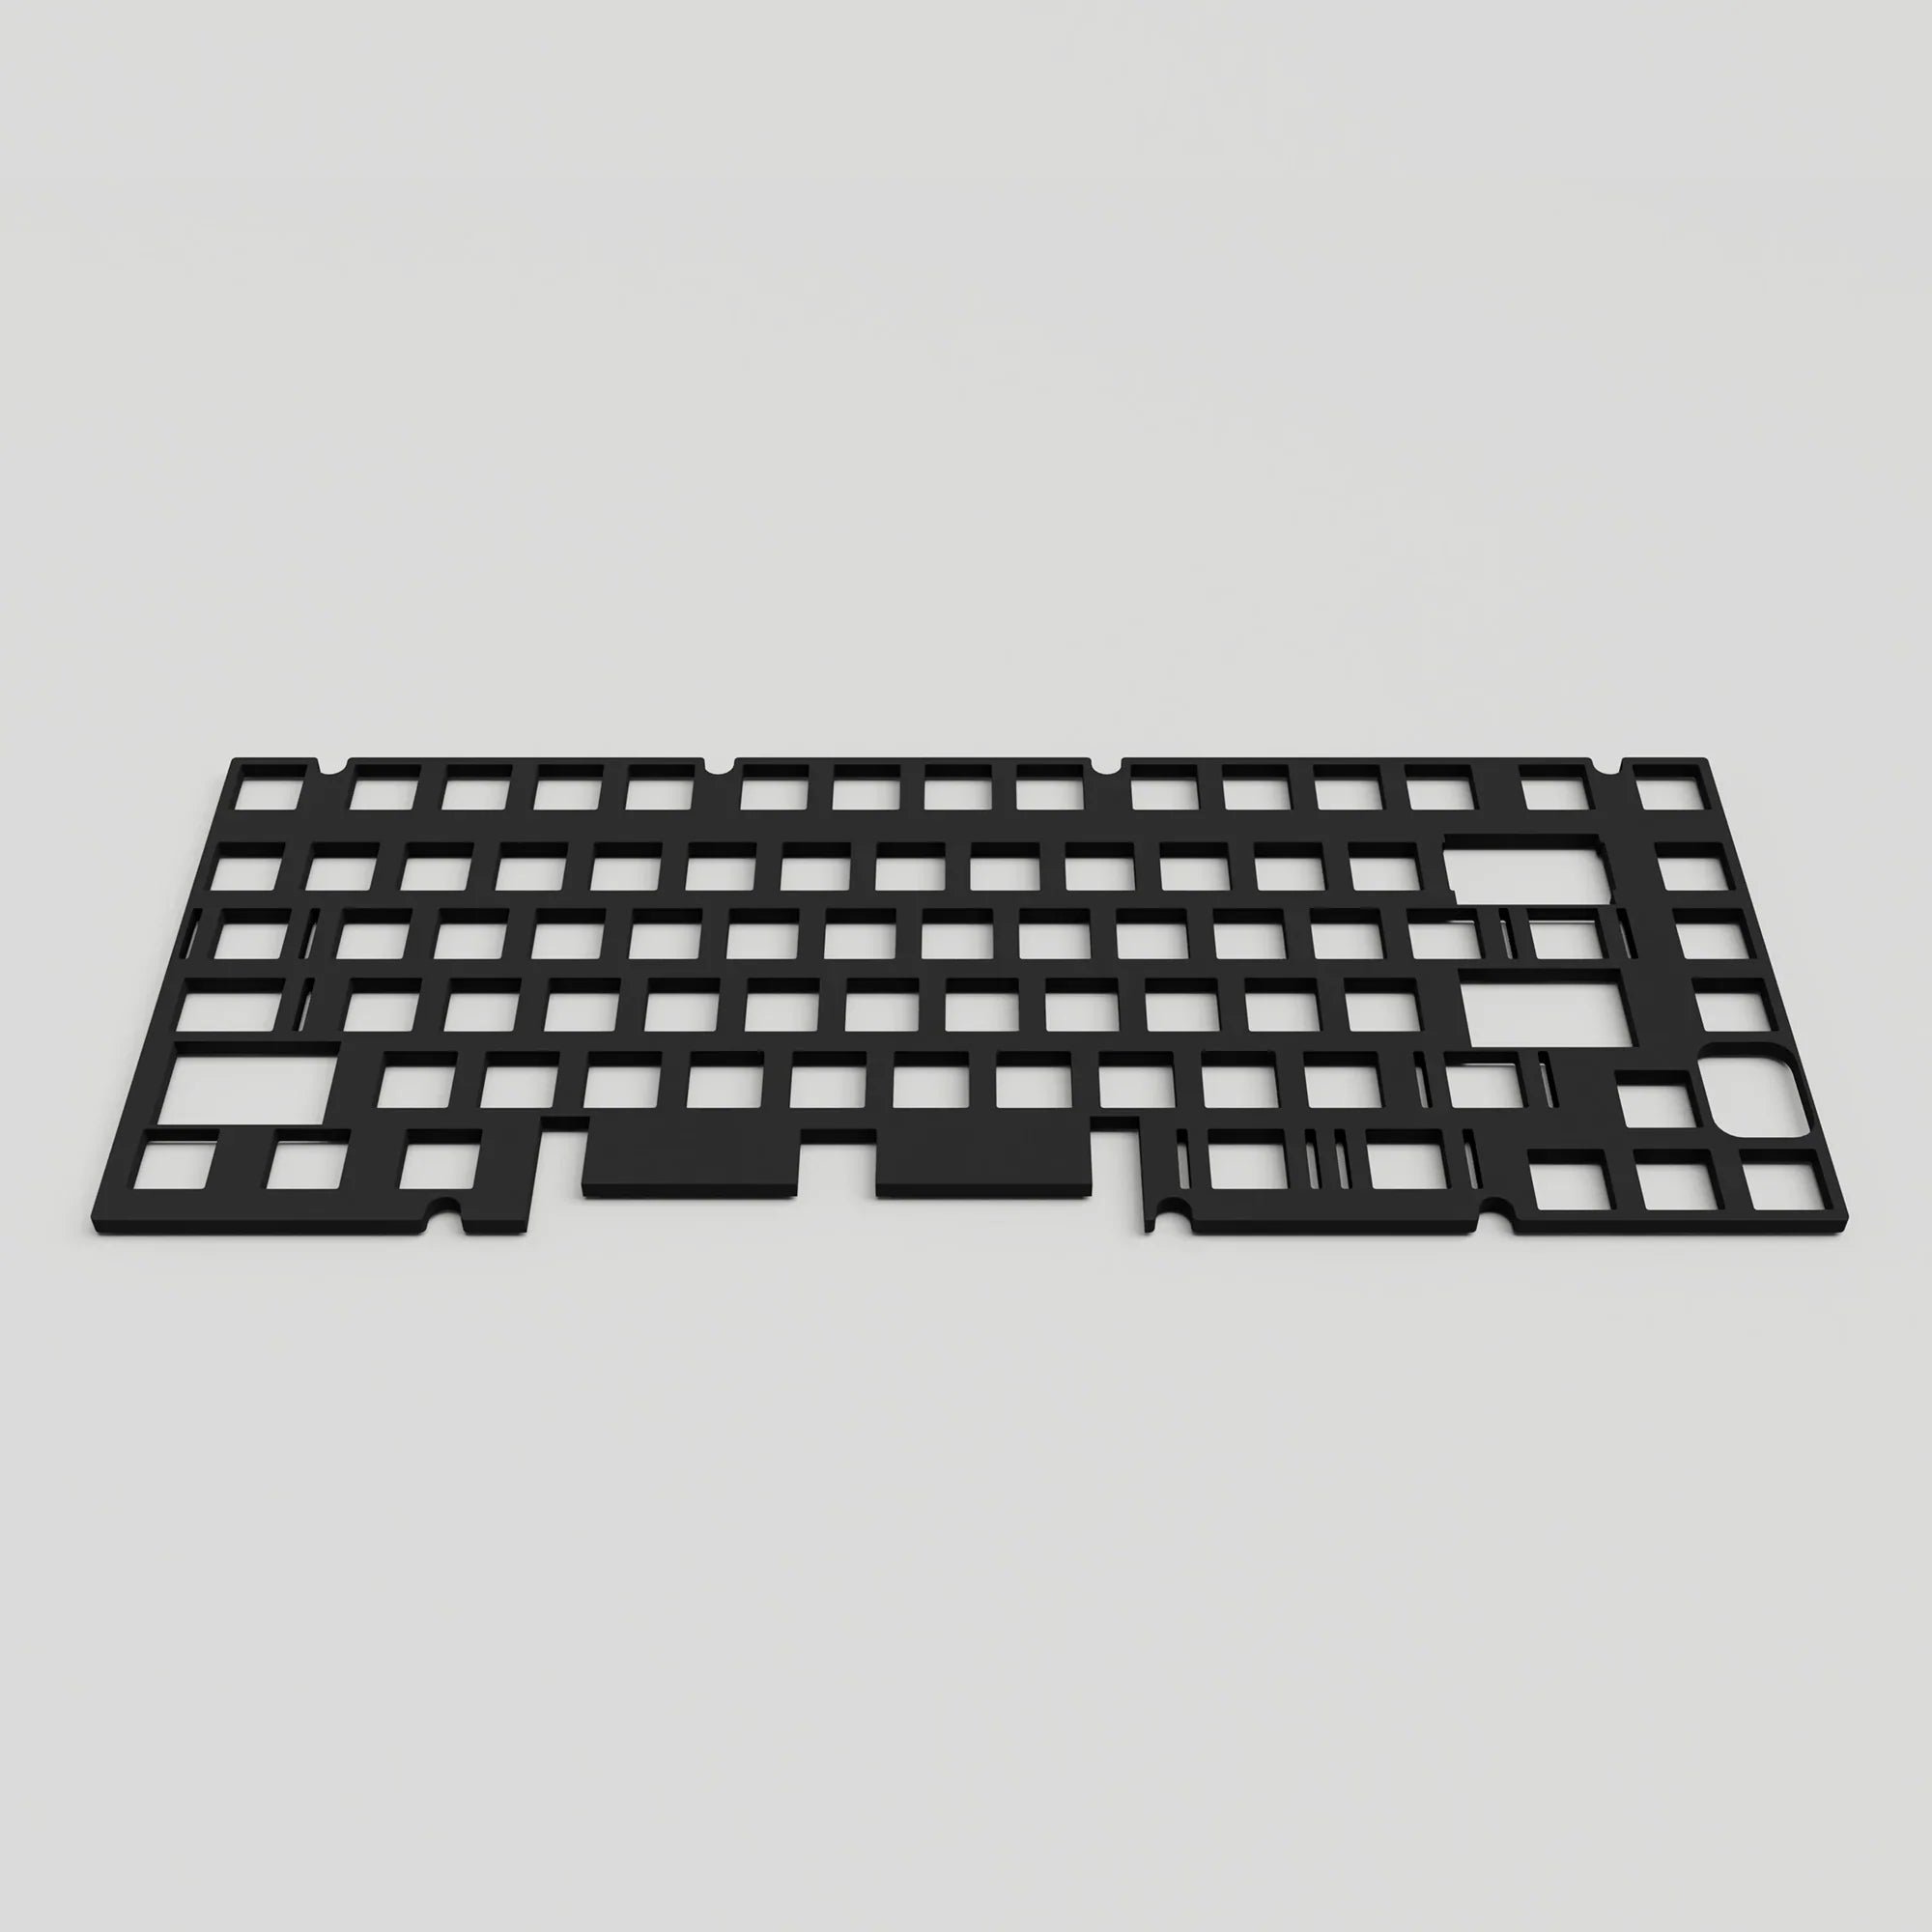 KBDfans Custom Keyboard Bounce 75 Accessories